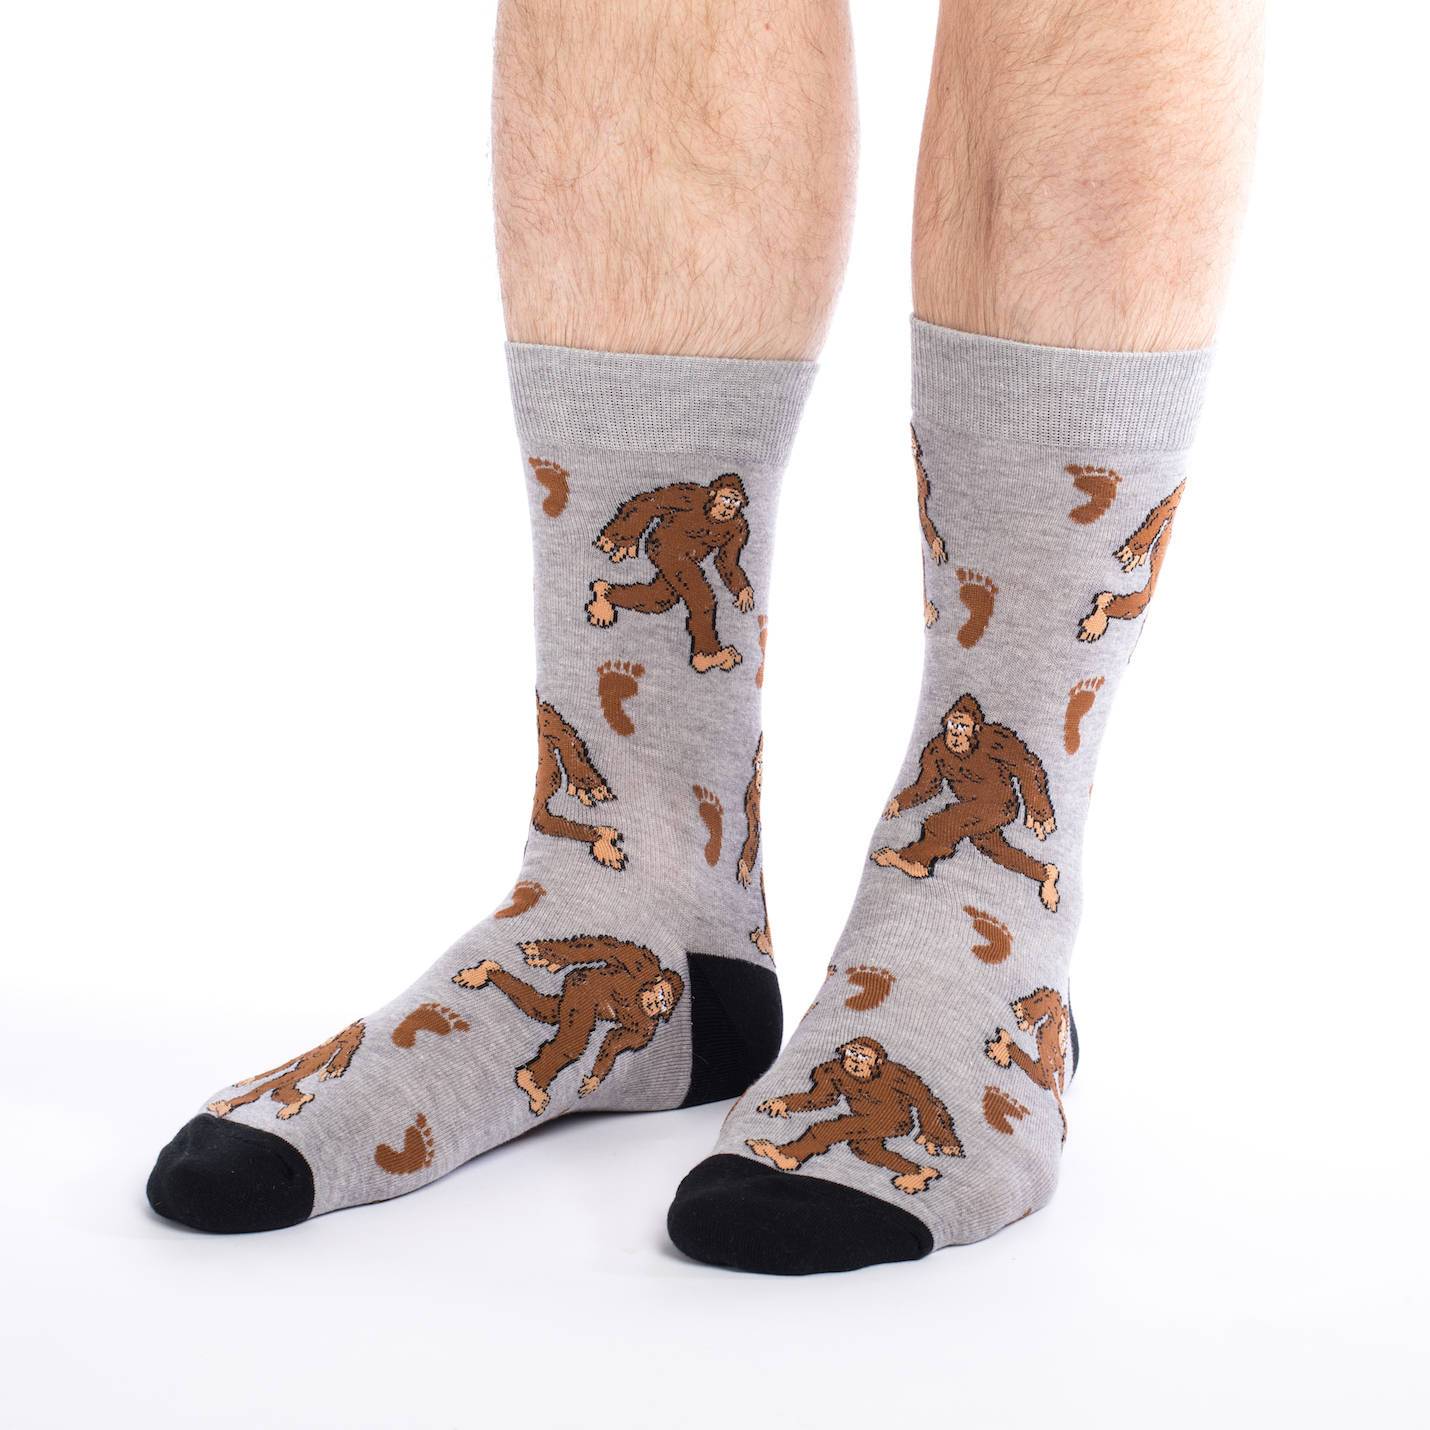 Men's Bigfoot Socks – Good Luck Sock